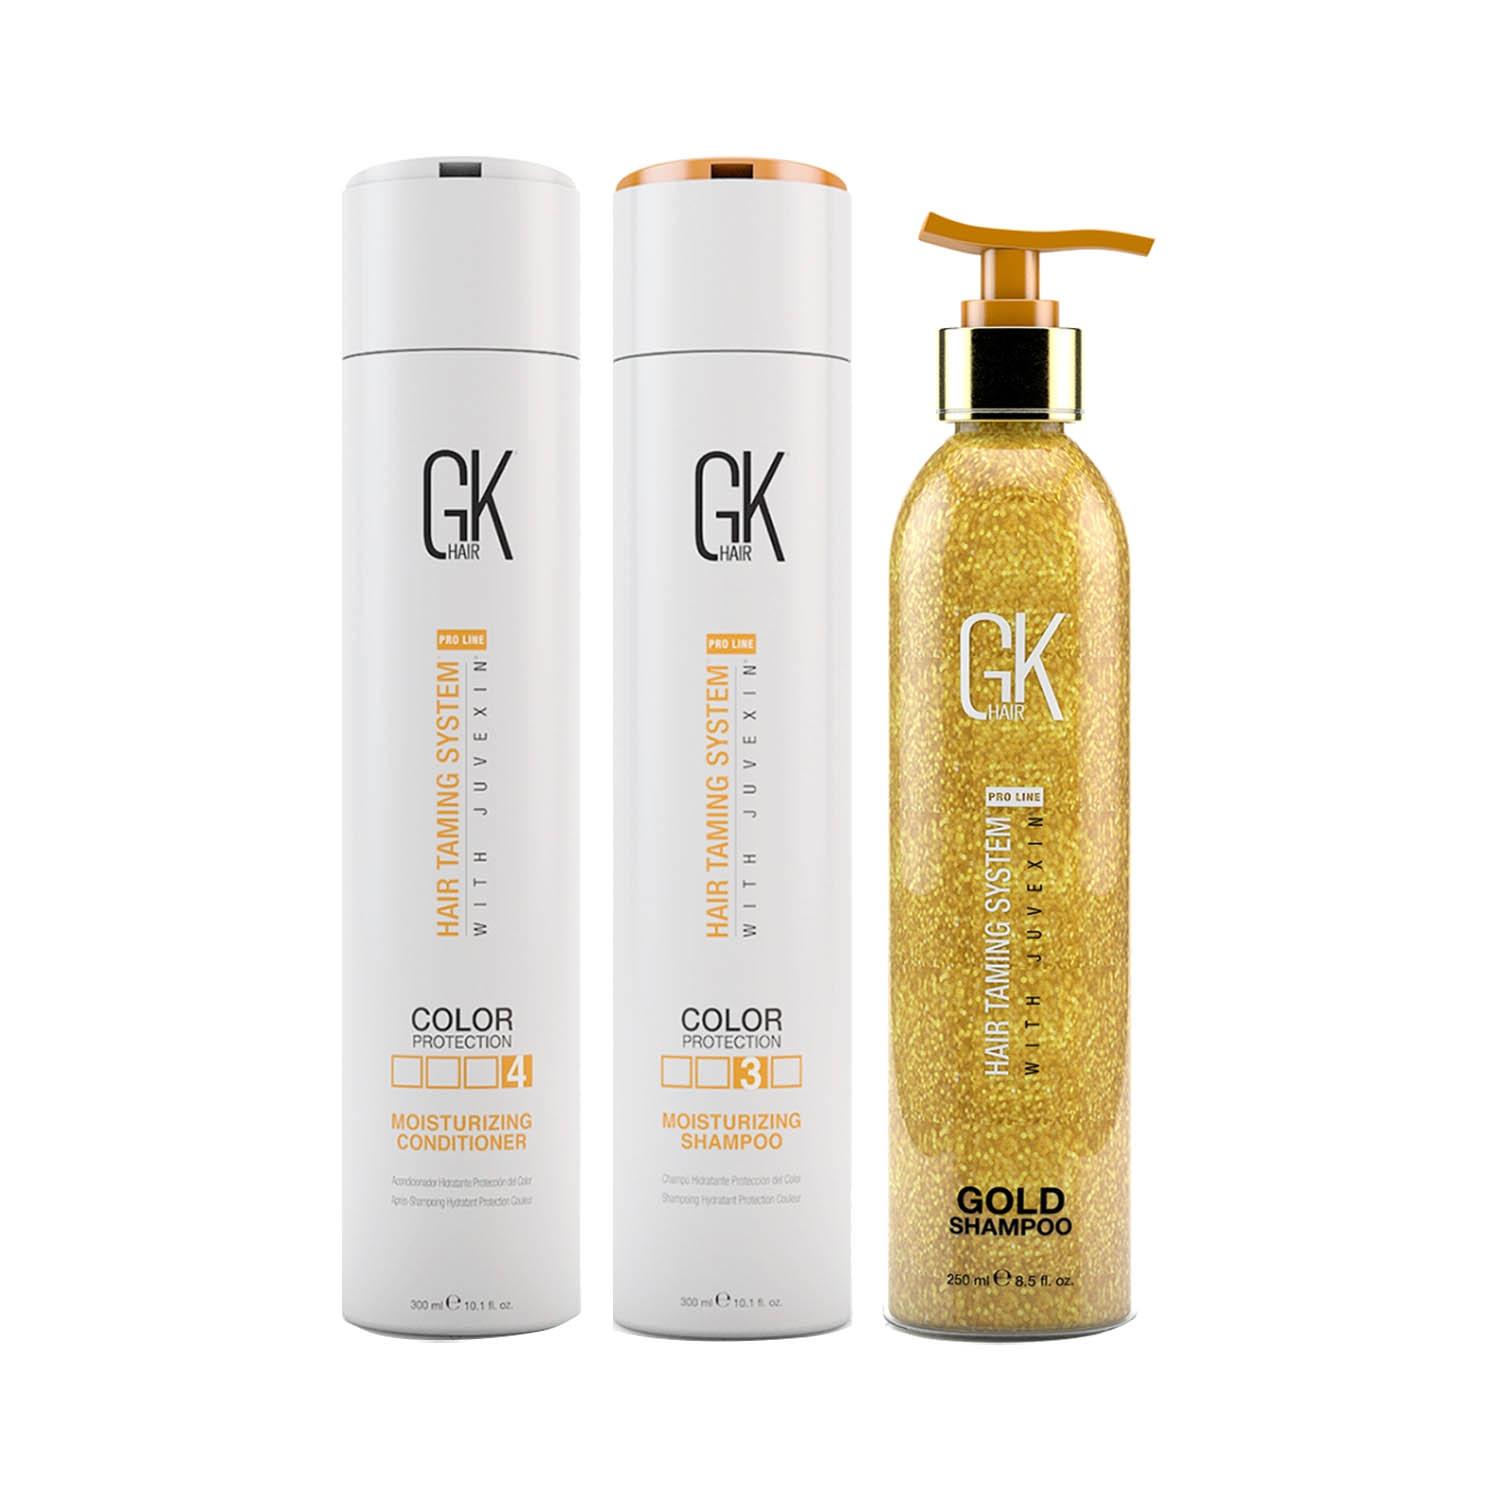 GK Hair | GK Hair Moisturizing Shampoo and Conditioner 300ml with Gold Shampoo 250ml